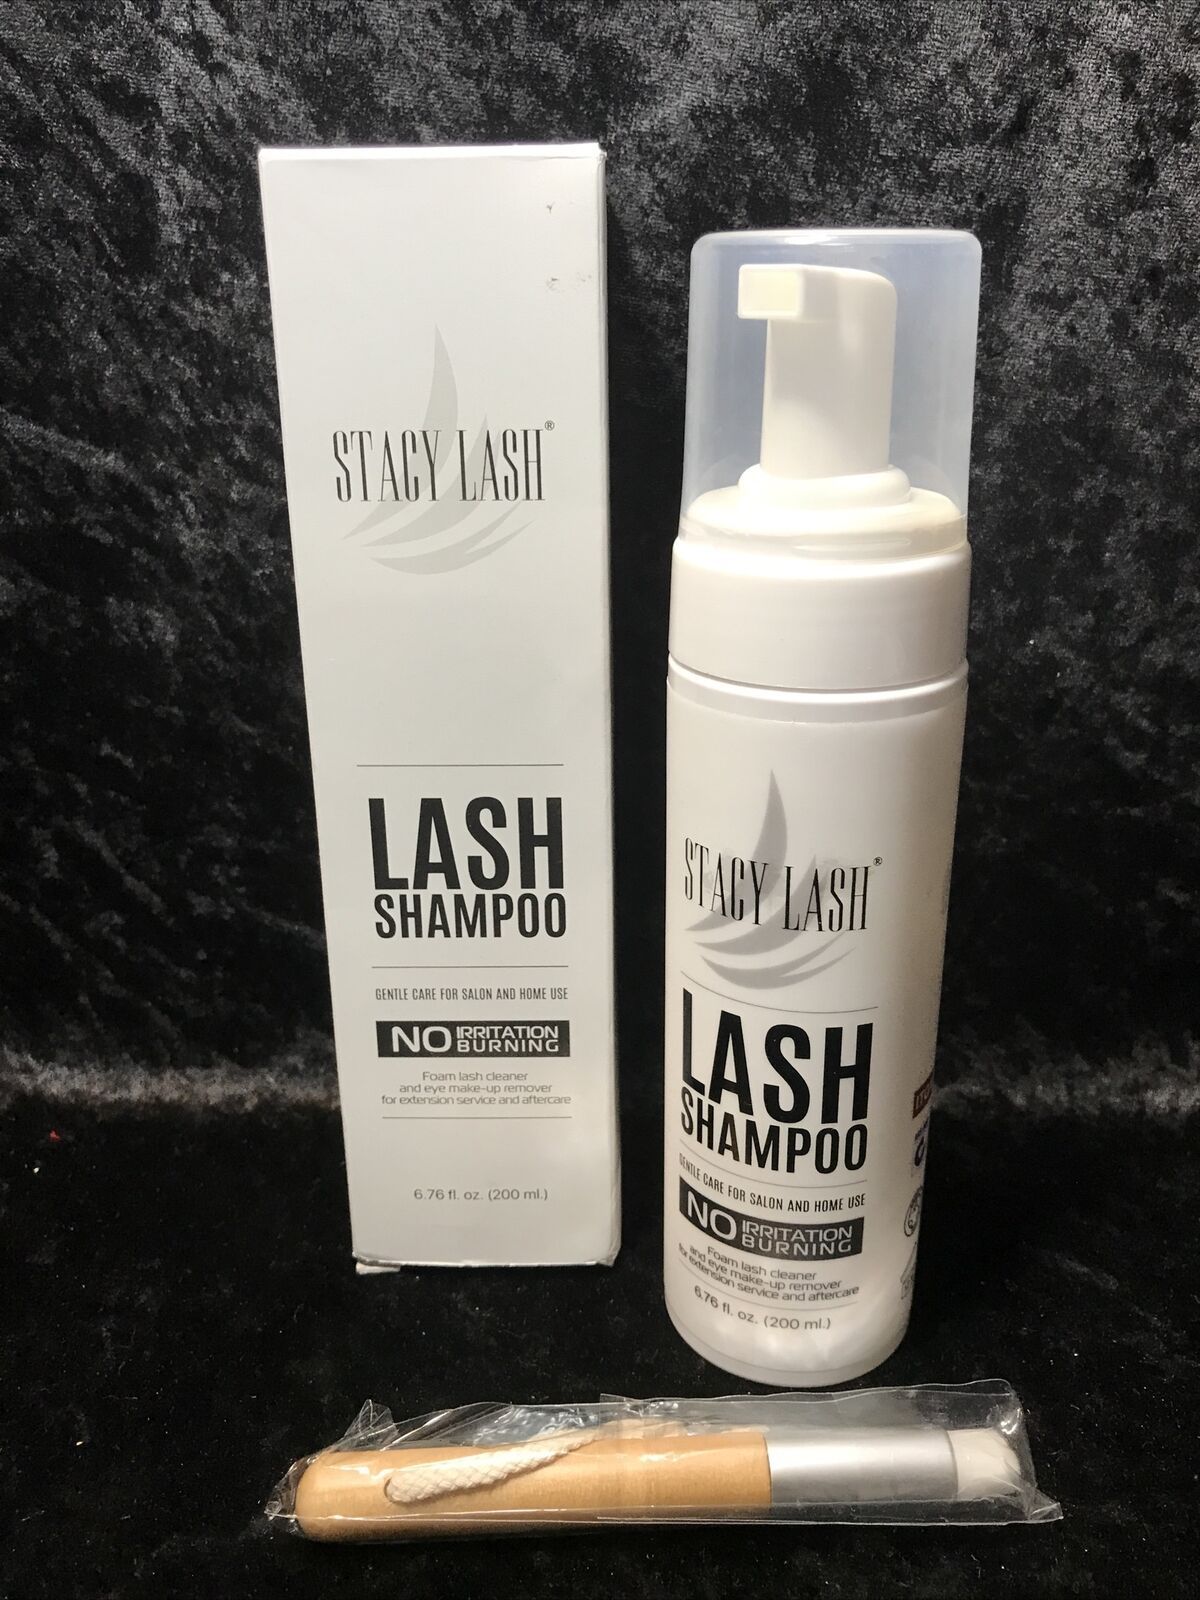 Primary image for 200ml Eyelash Extension Shampoo Stacy Lash + Brush / Eyelid Foaming Cleanser